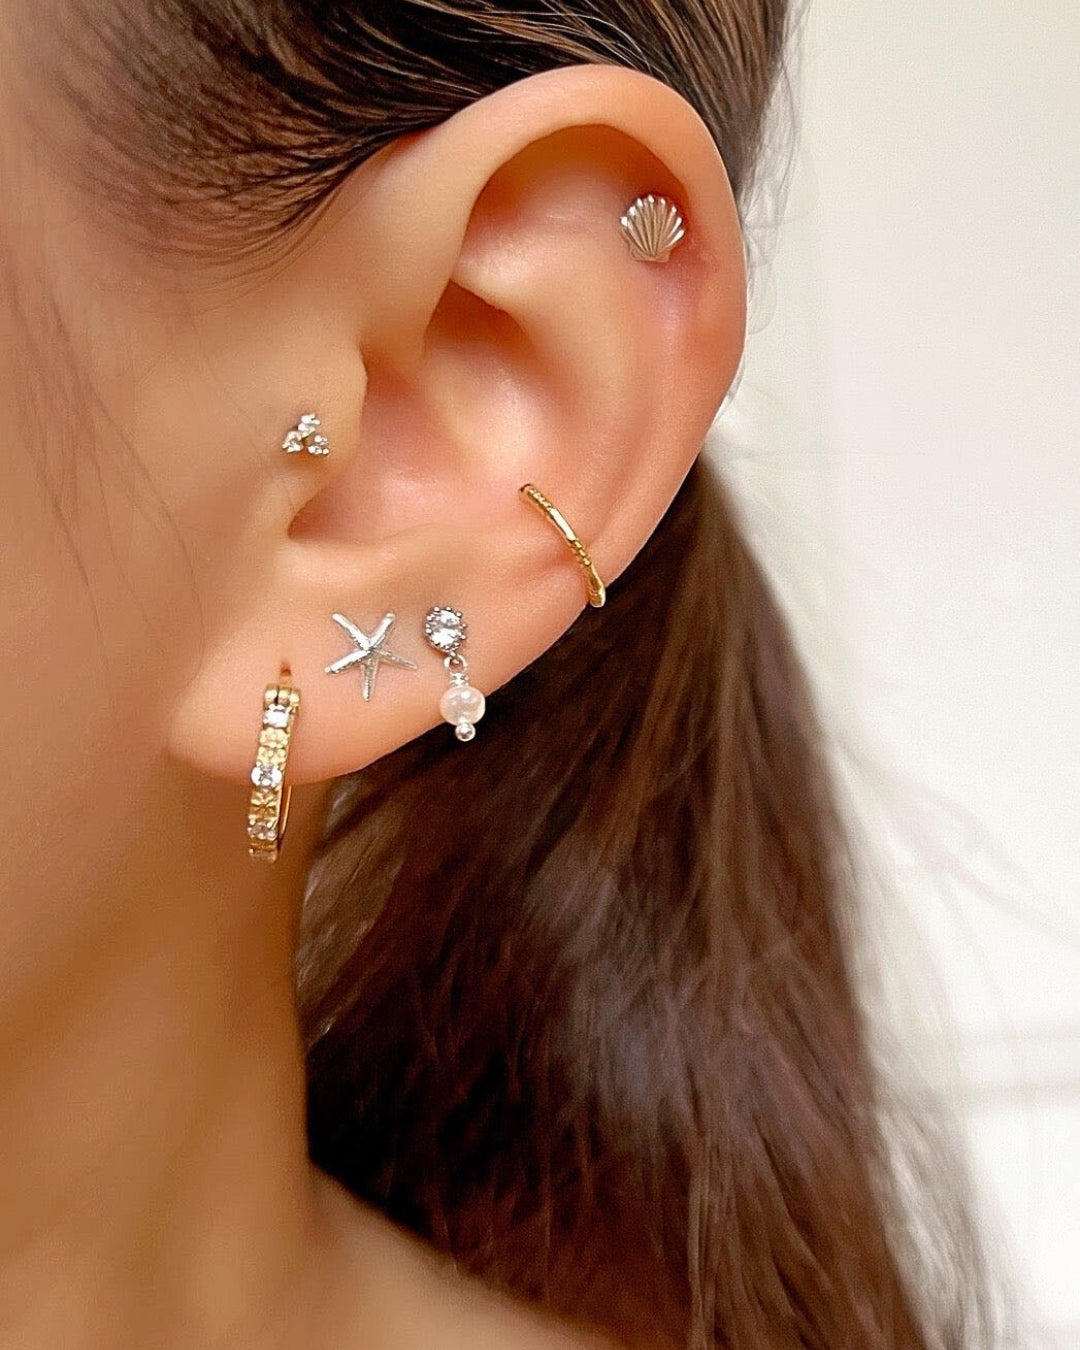 Sterling silver seashell stud post earrings with butterfly backs on a model